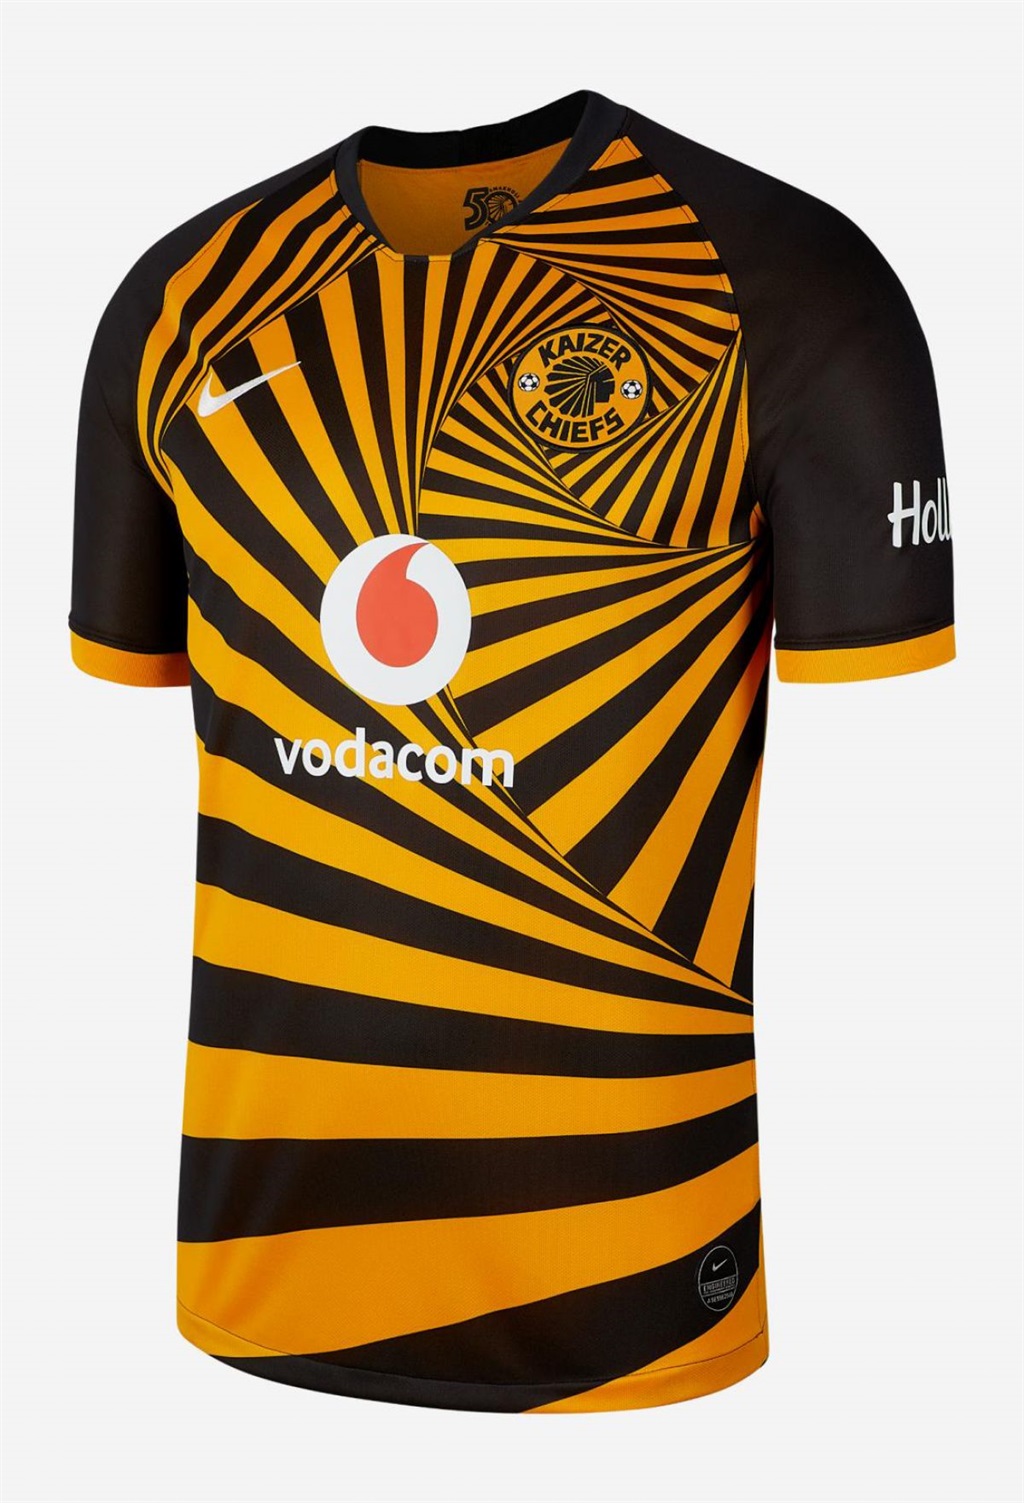 Kaizer Chiefs home kit 2019/20 season.